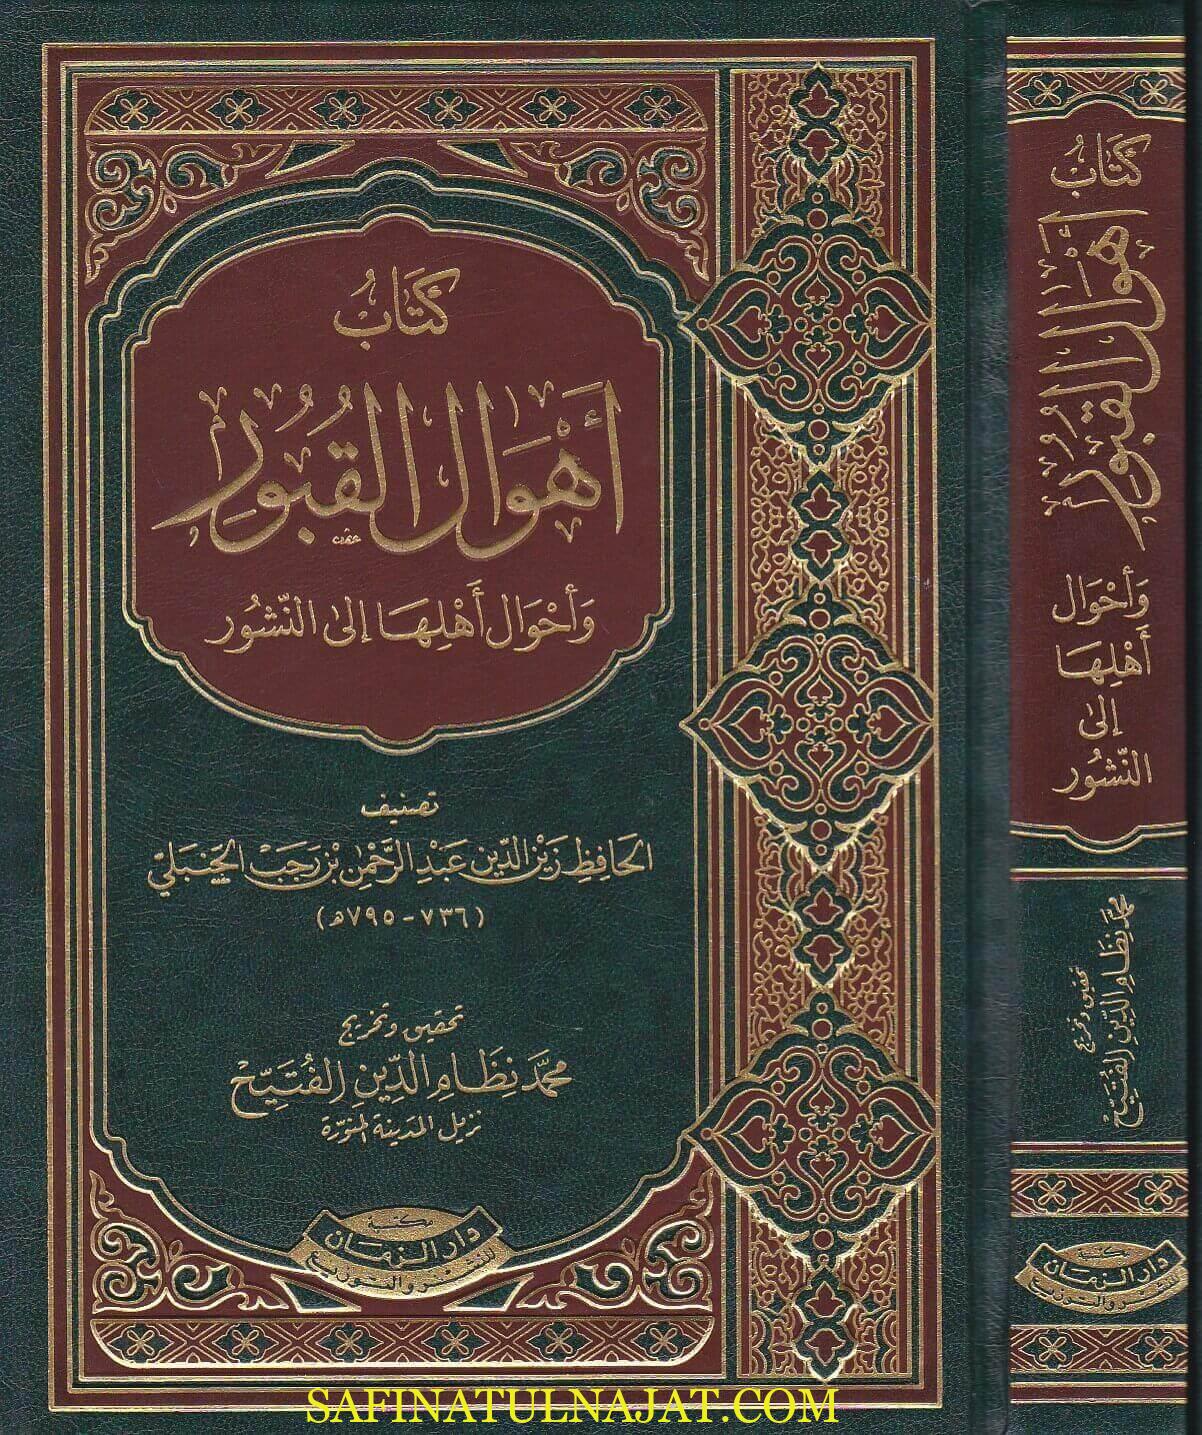 Ибн аль ханбали. Хафиз ибн Раджаб. Поэма ибн Раджаб Аль-Ханбали. Ибн Кудама Аль-Макдиси Аль-Ханбали. Ибн Раджаб книги.